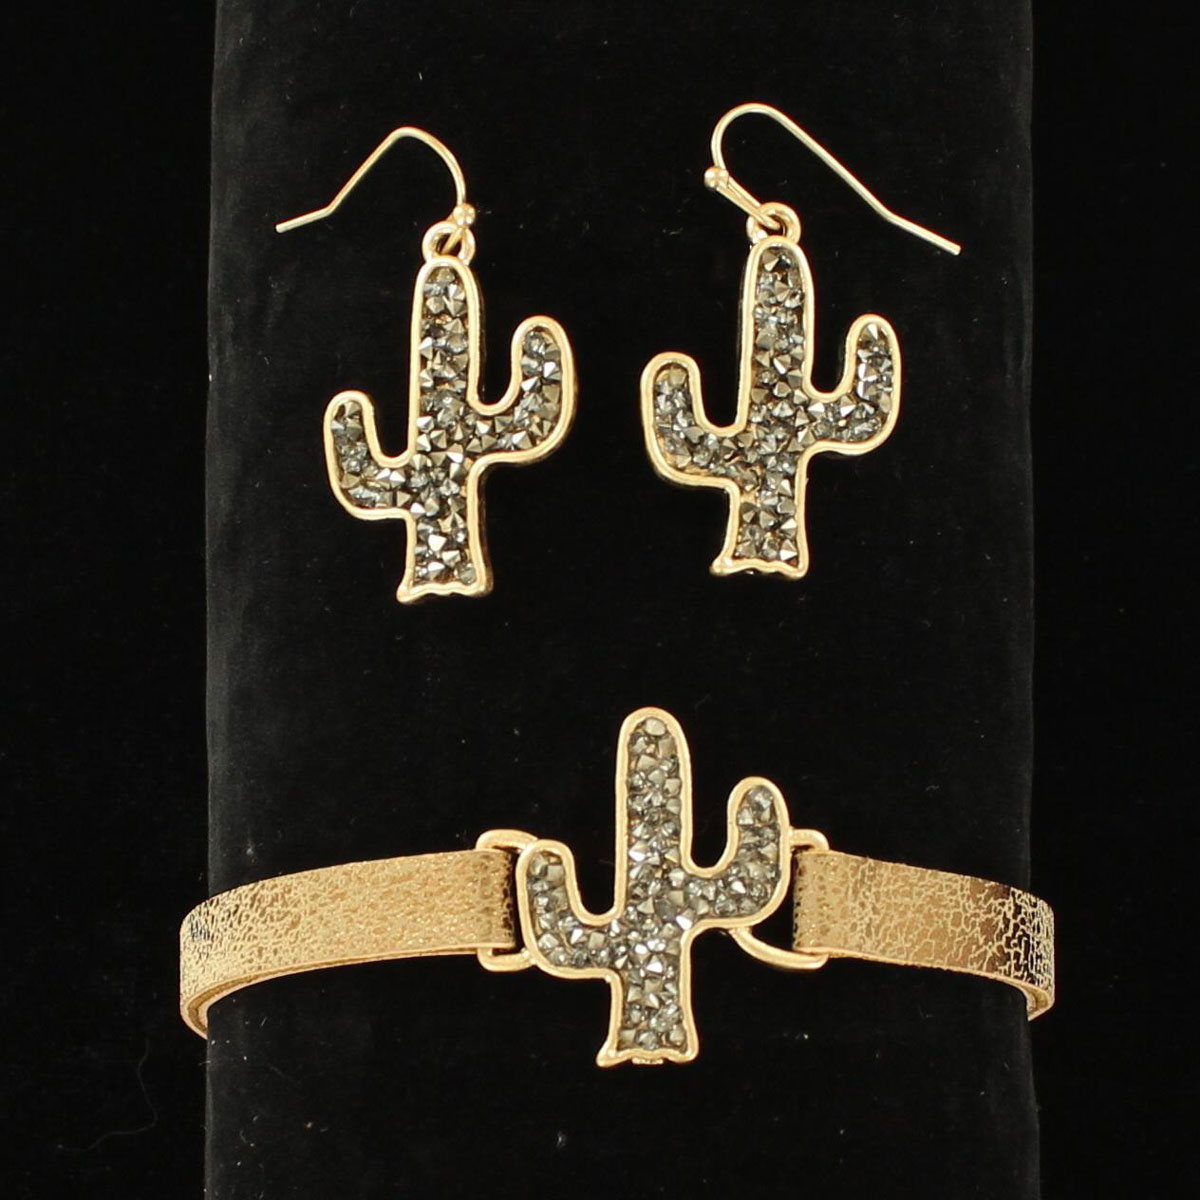 30958 Cactus Bracelet With Snap Closure Jewelry Set, Gold